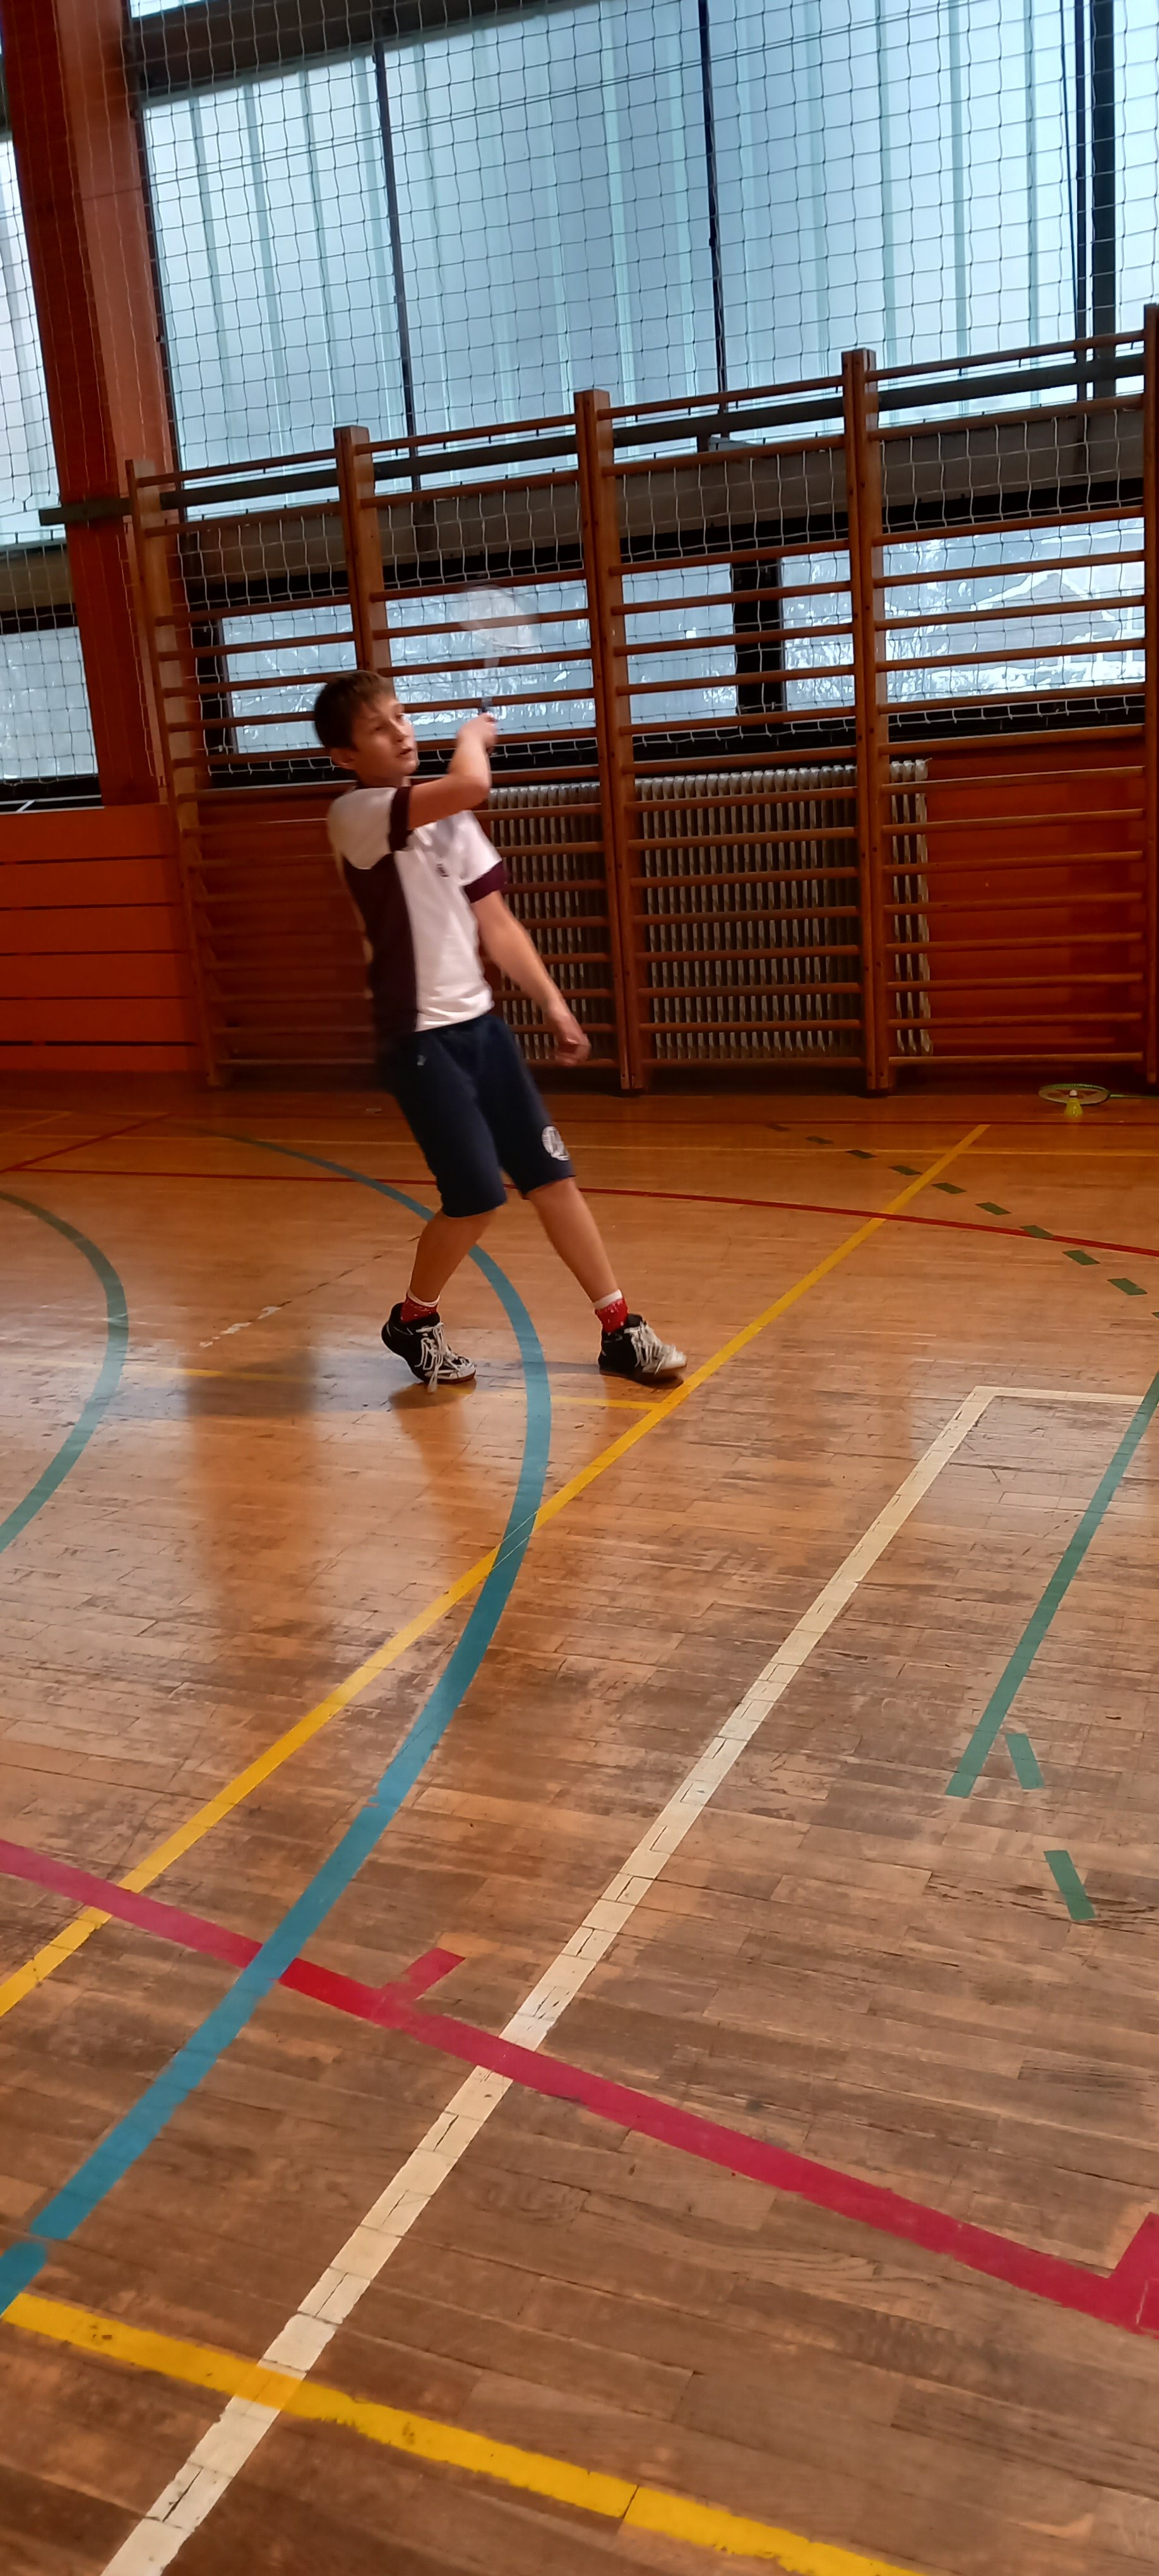 medobcinsko_badminton-18